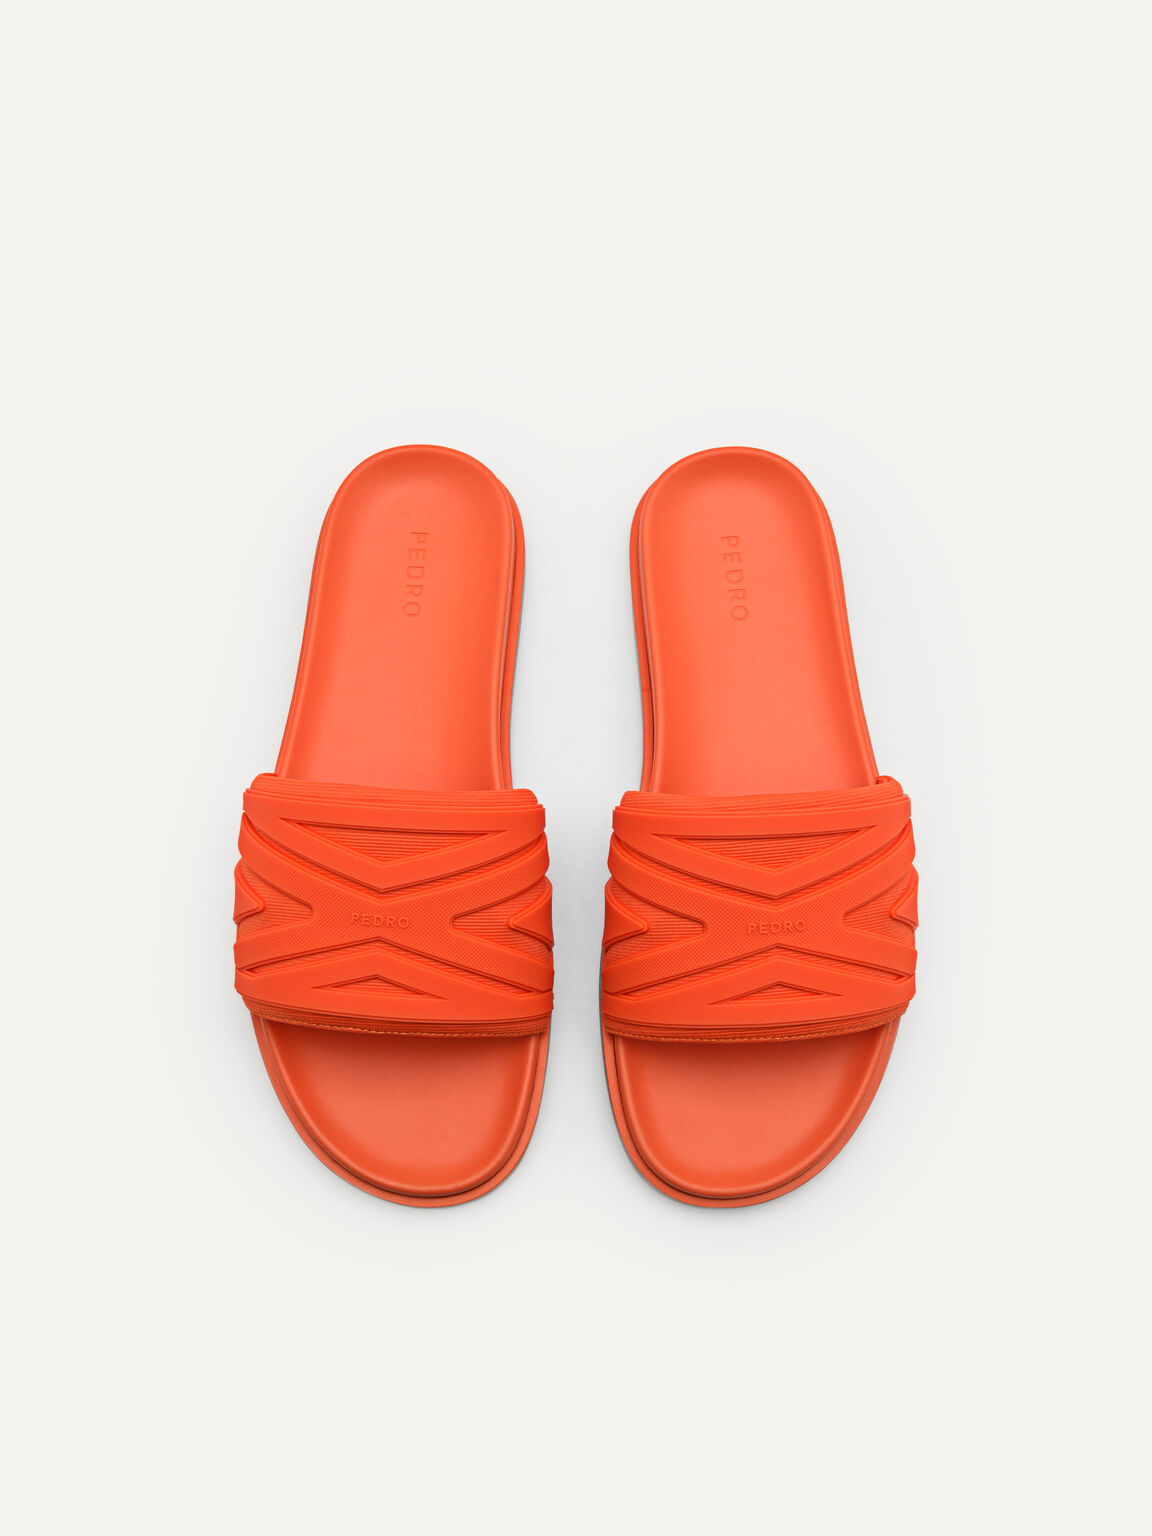 Nova Slide Sandals, Orange, hi-res